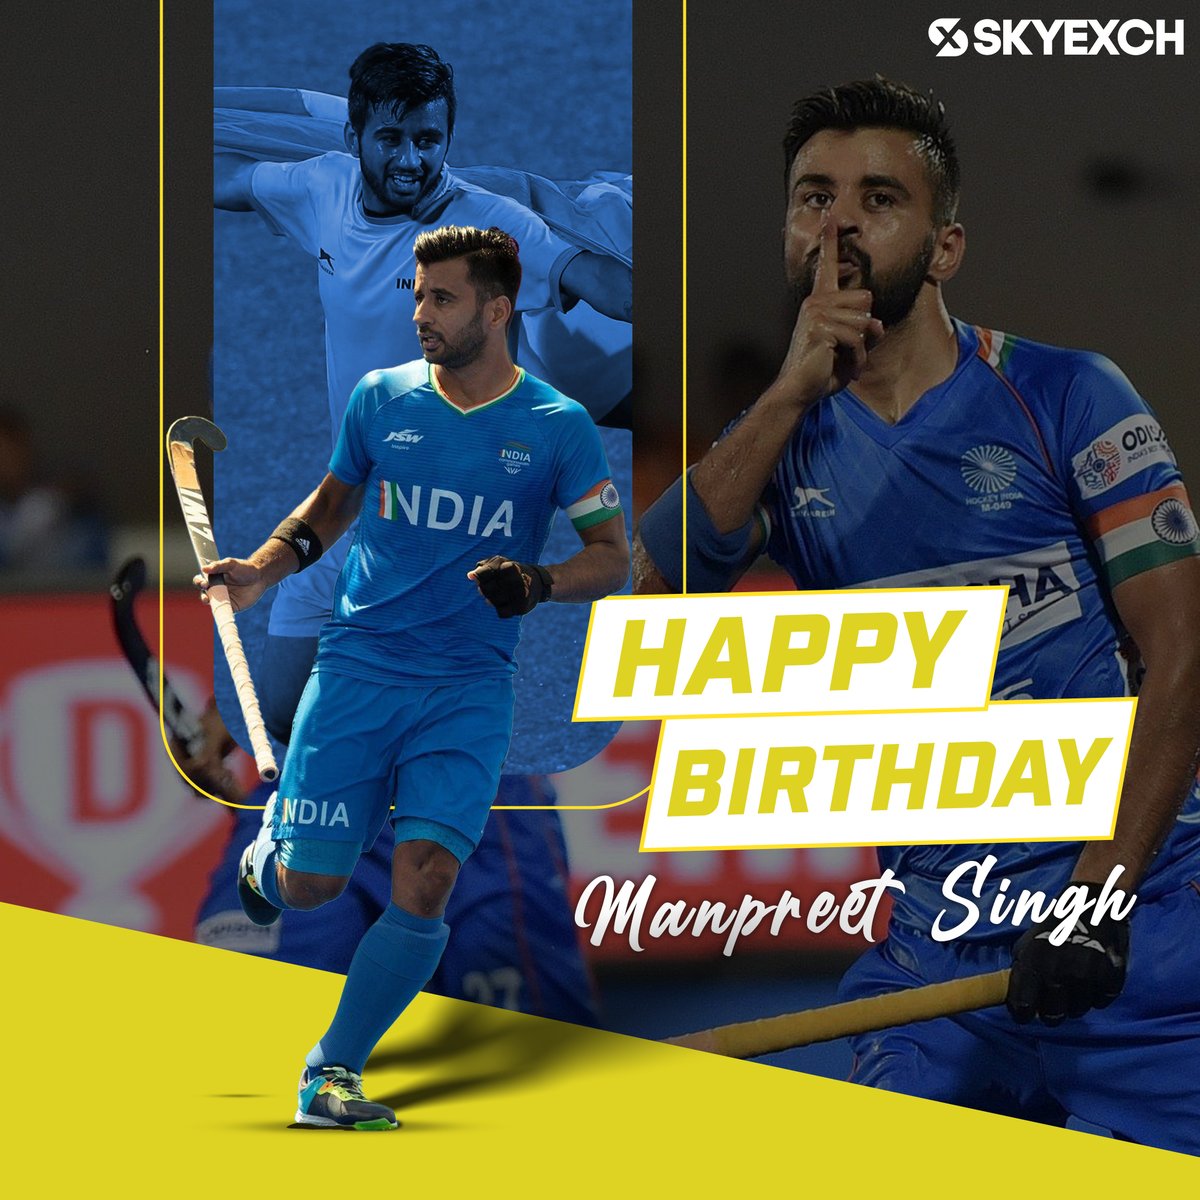 Wishing a Happy Birthday to the talented and charismatic Manpreet Singh!

#ManpreetSingh #HappyBirthday #IndianHockey #hockey #SkyExch